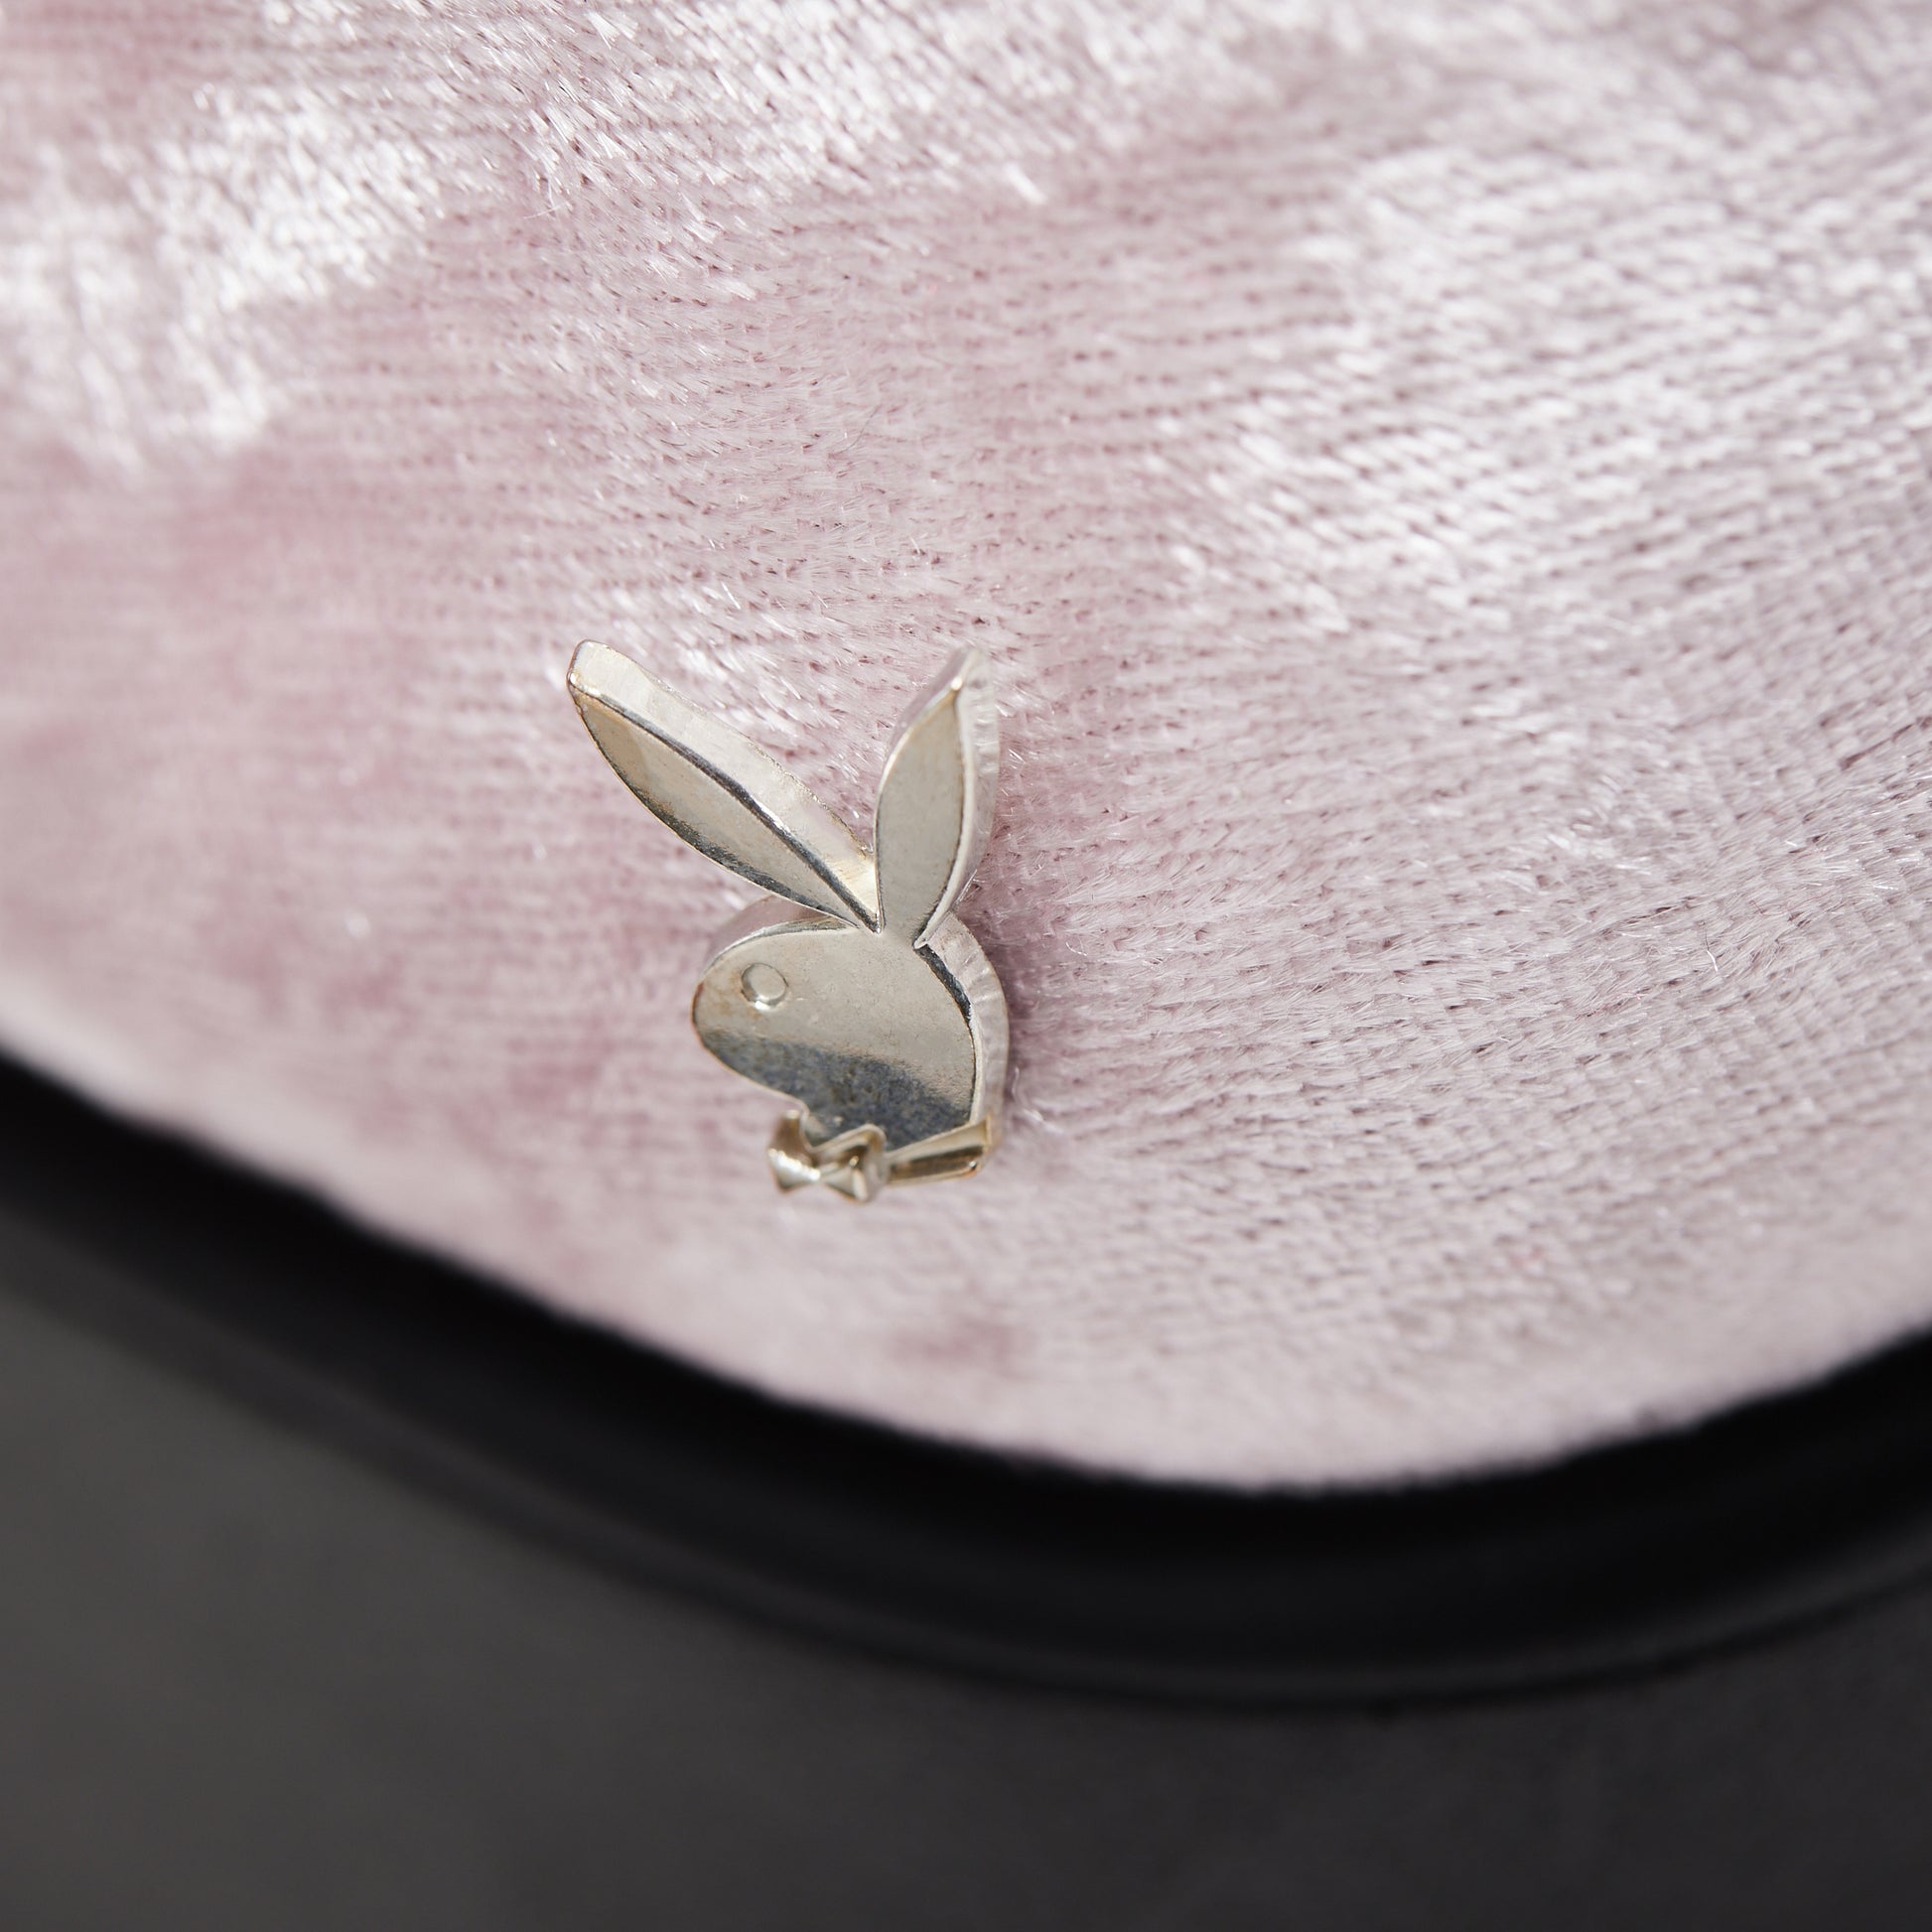 Tira Playboy Mary Janes 'Sweet Vigilante Edition' - Mary Janes - KOI Footwear - Pink - Playboy Logo Detail